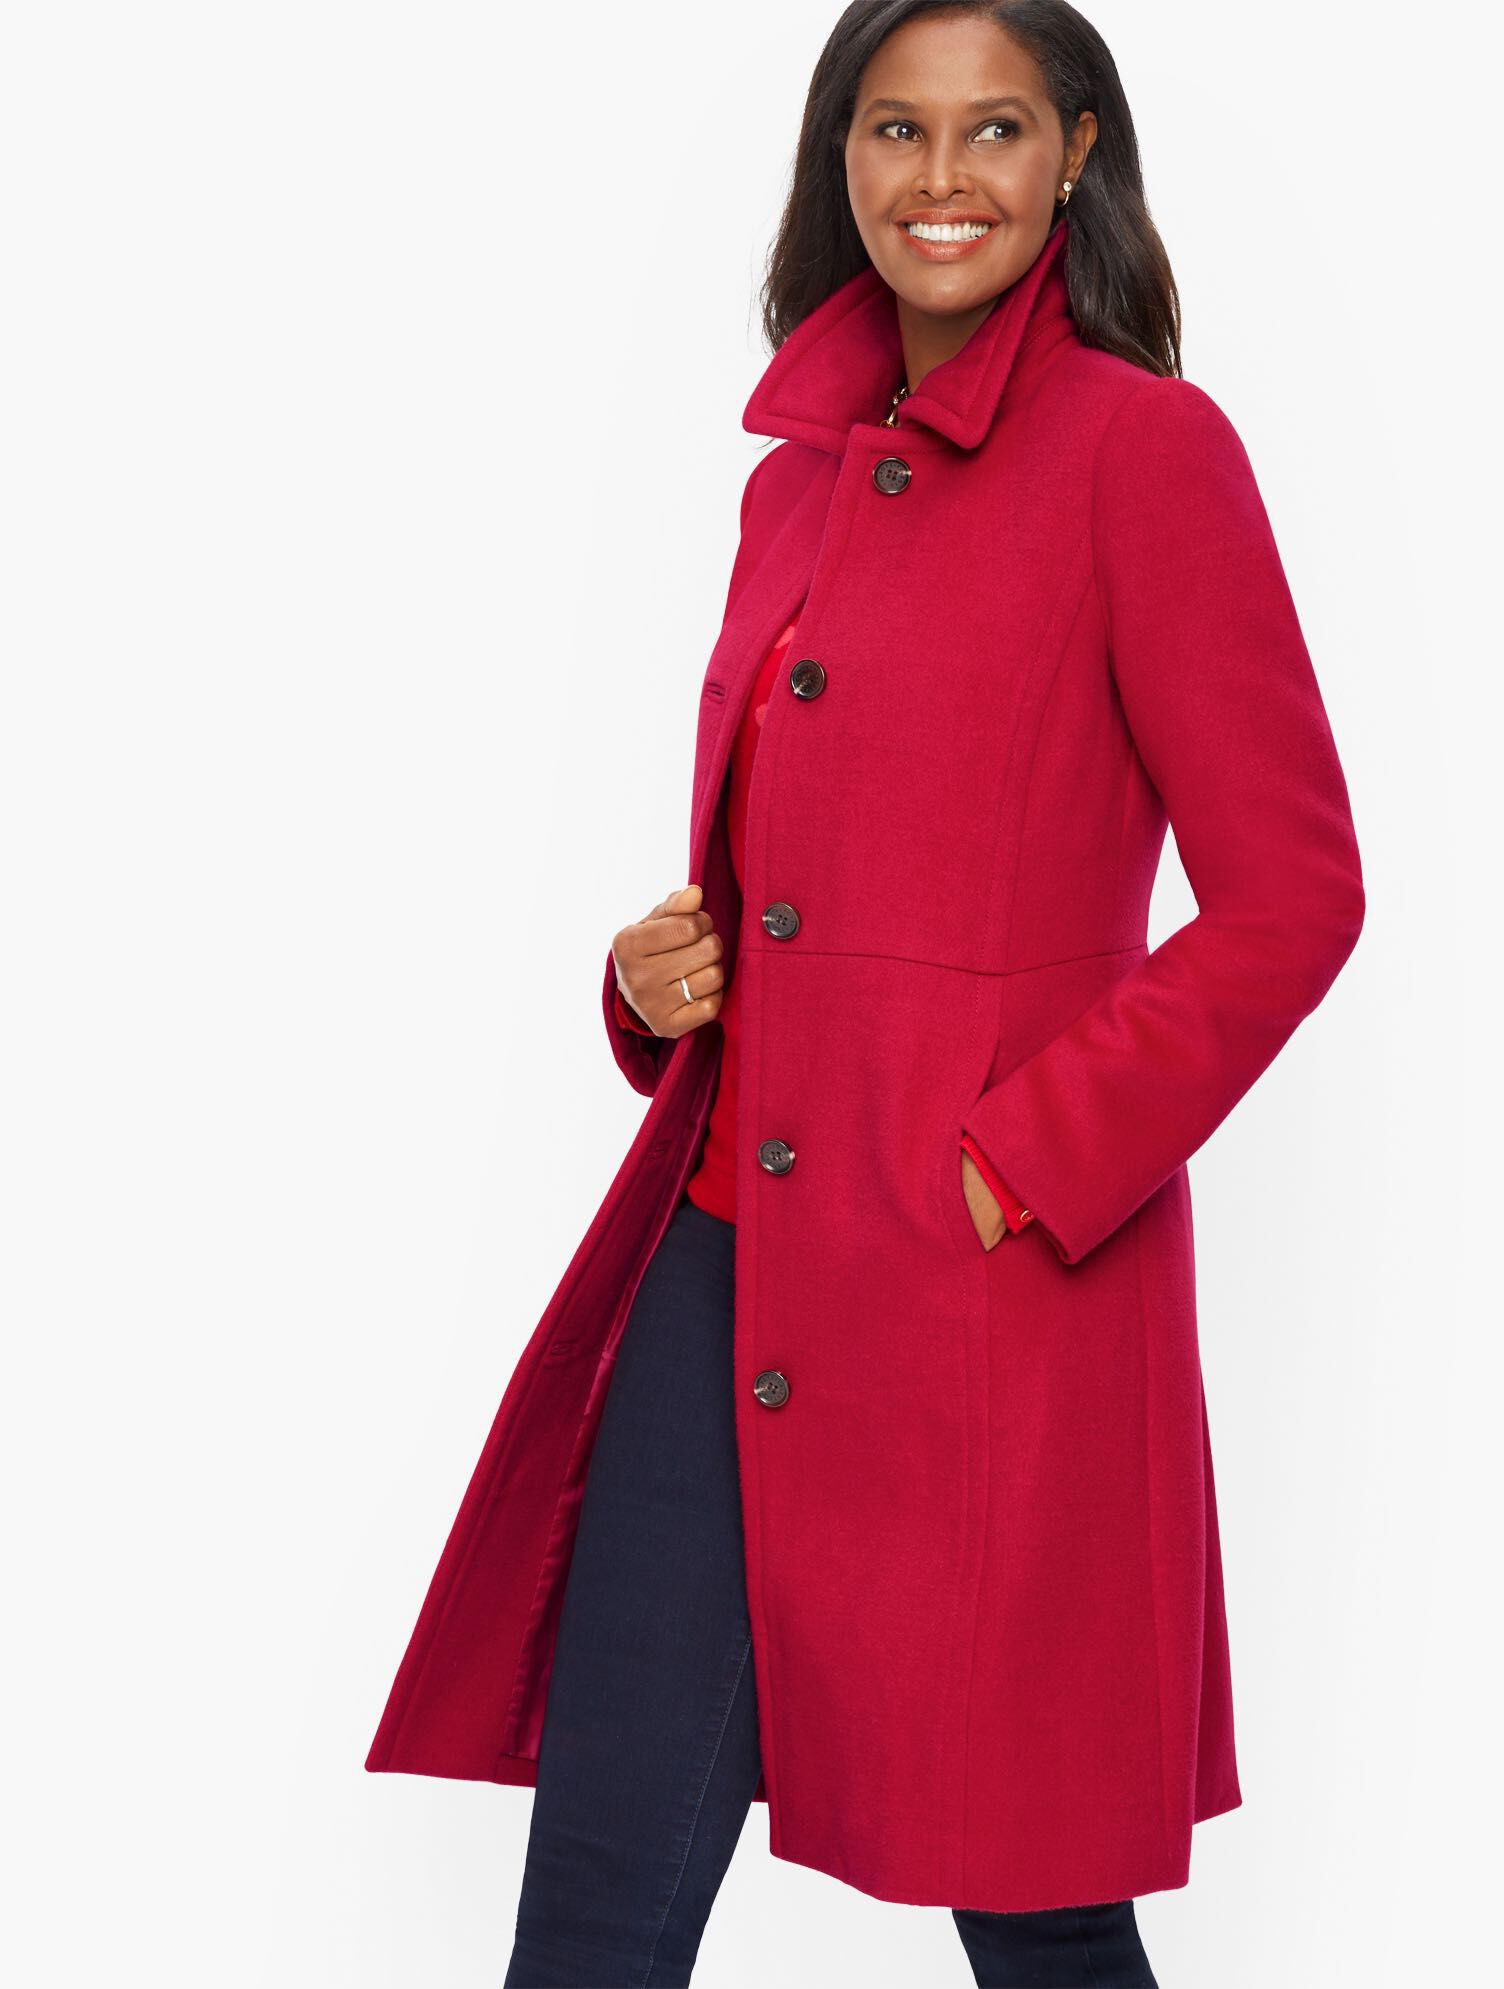 Talbots Womens Petite Jacket Coat Blazer Wine Red Textured One